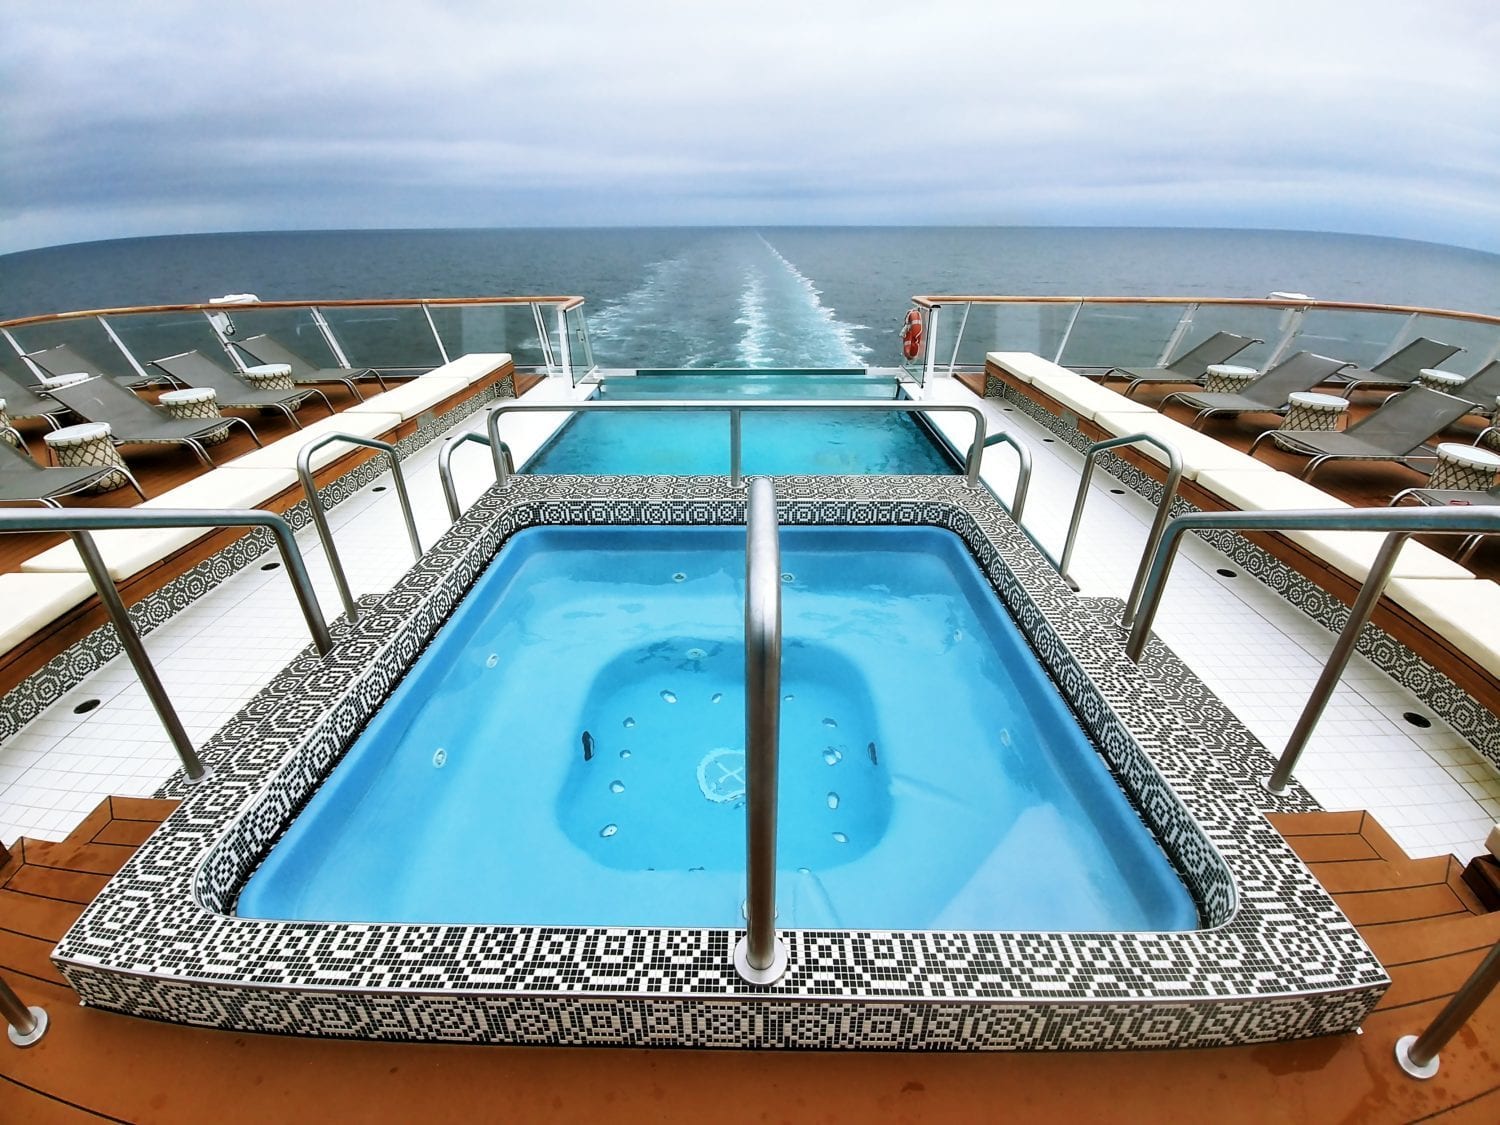 viking sky cruise ship review